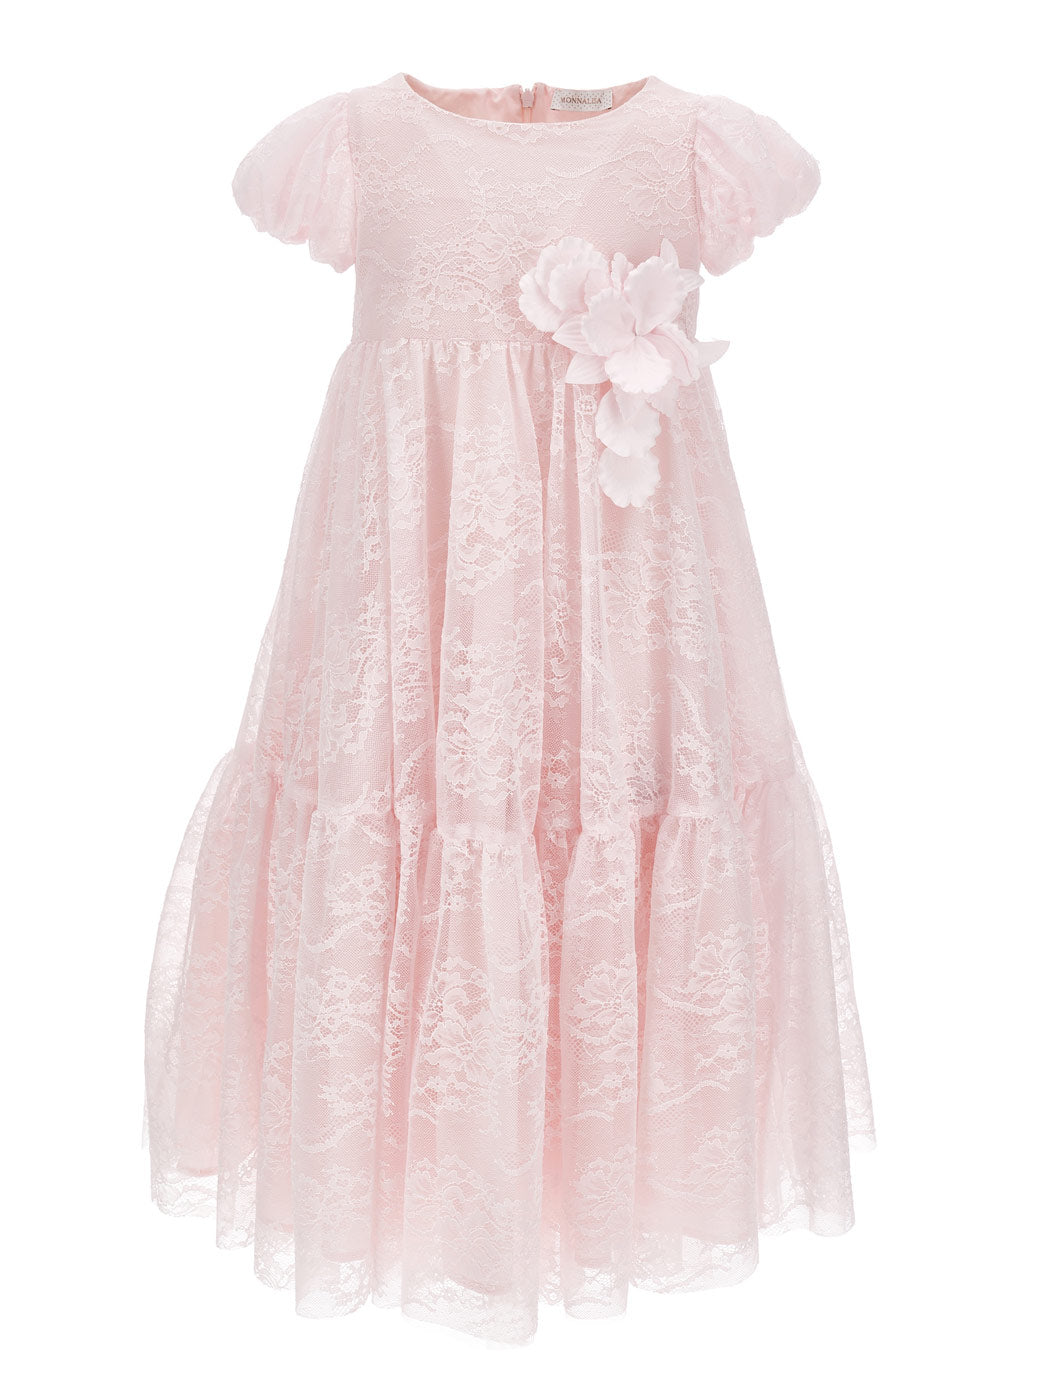 Girls floral lace dress-71C919 Pink